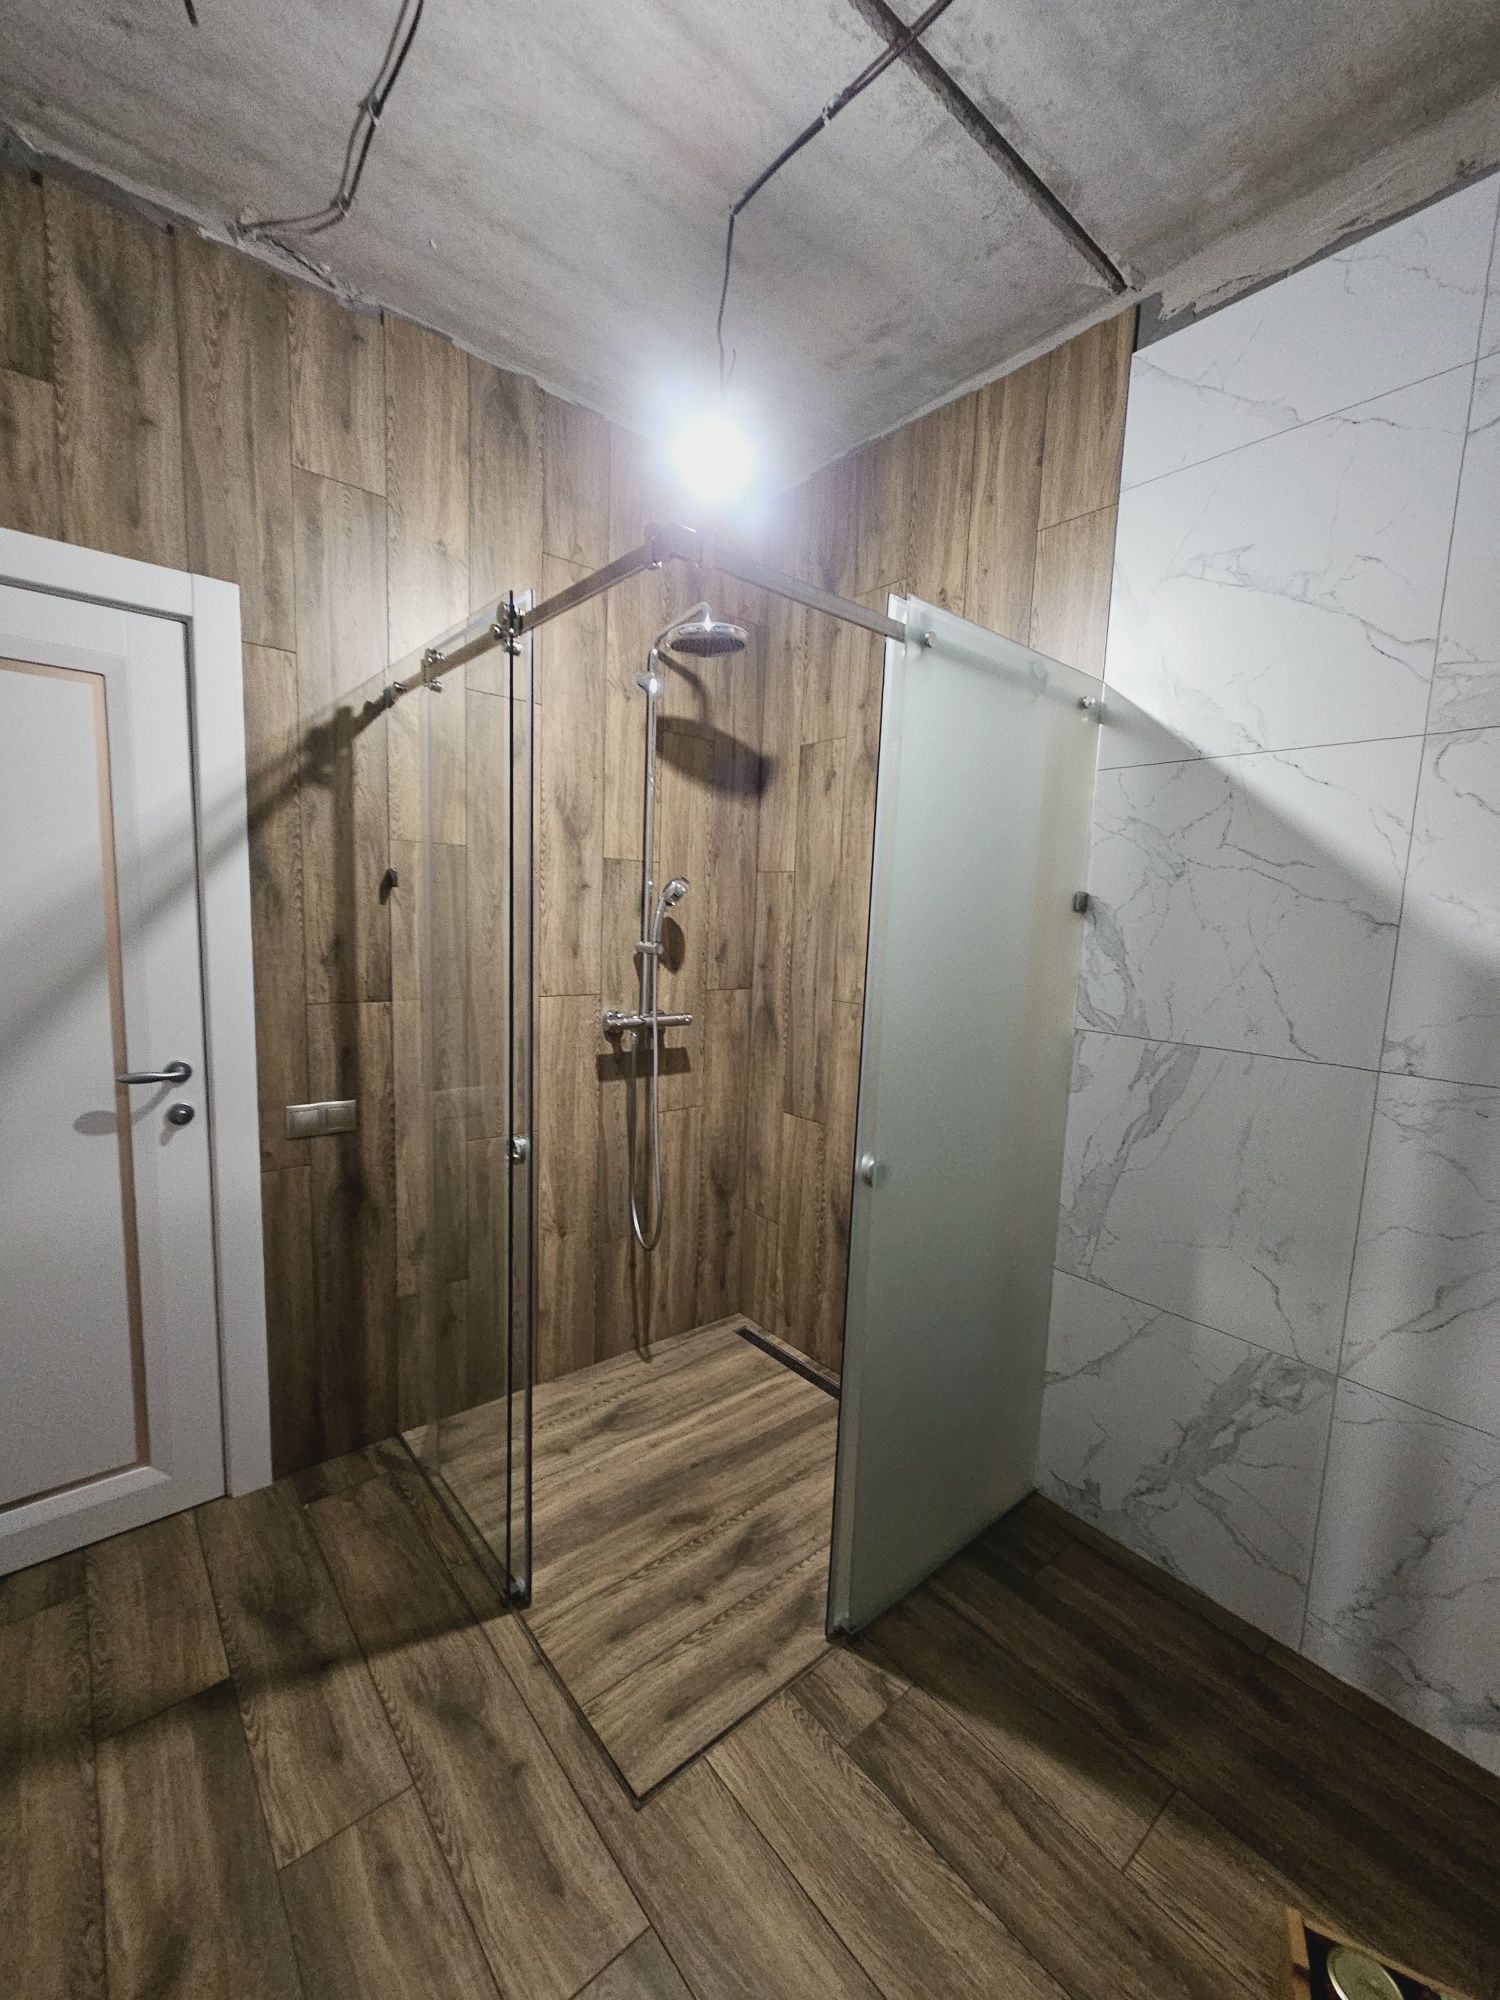 Розсувна душова кабіна ,скляна перегородка в душ,двері зі скла.